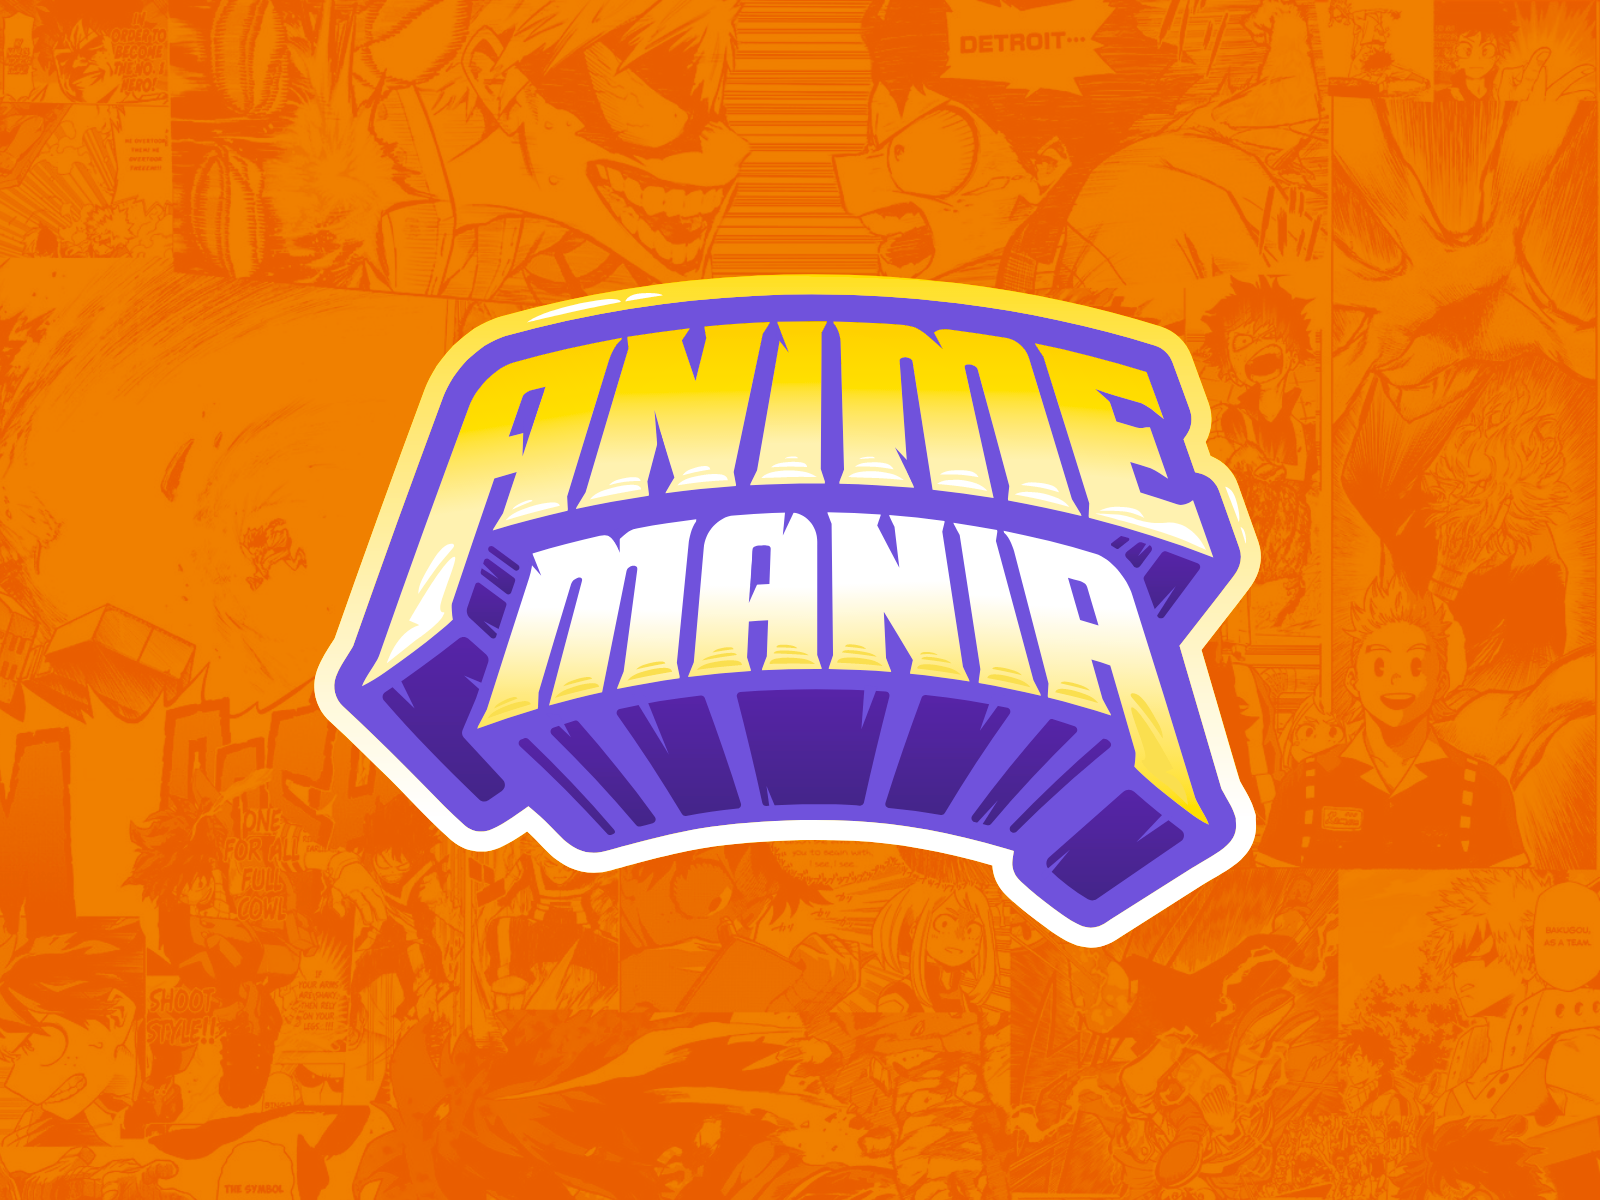 Anime Mania Logo by Mo Hashim on Dribbble